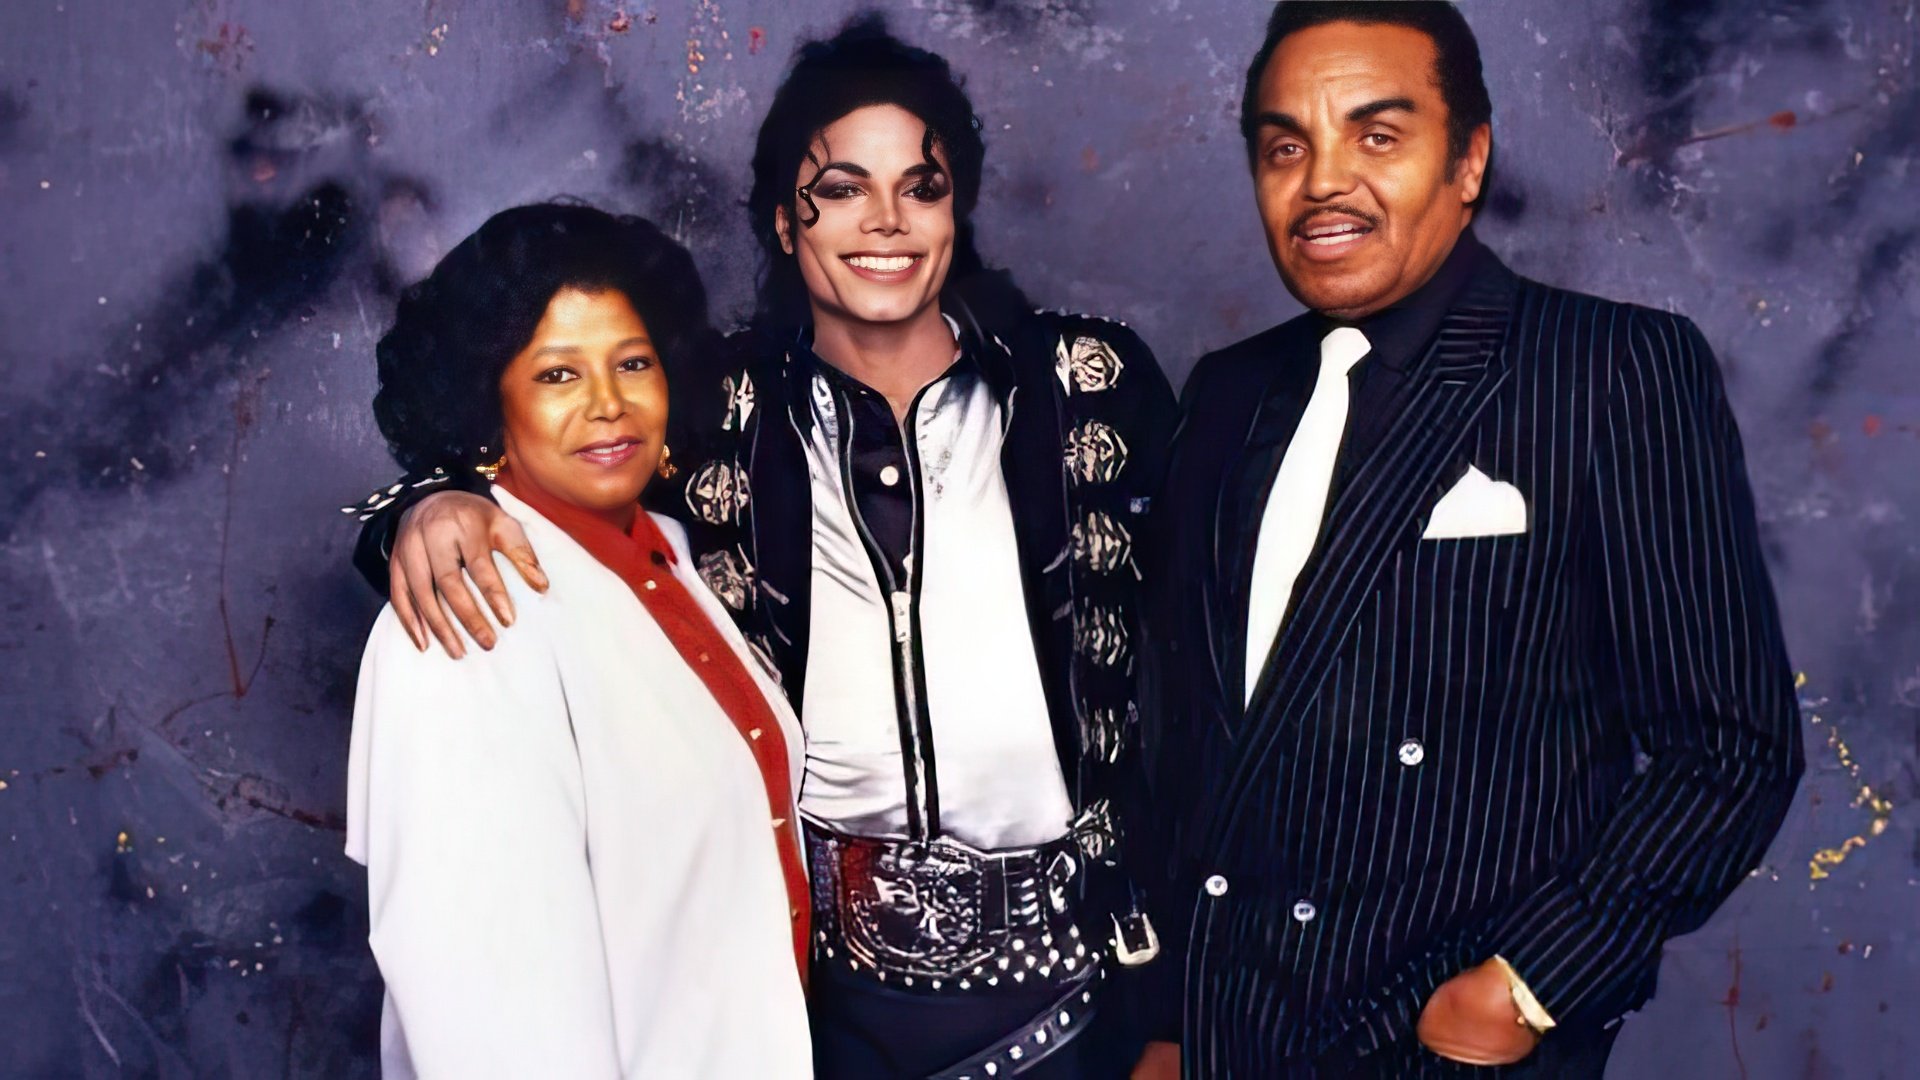 Michael Jackson with his parents